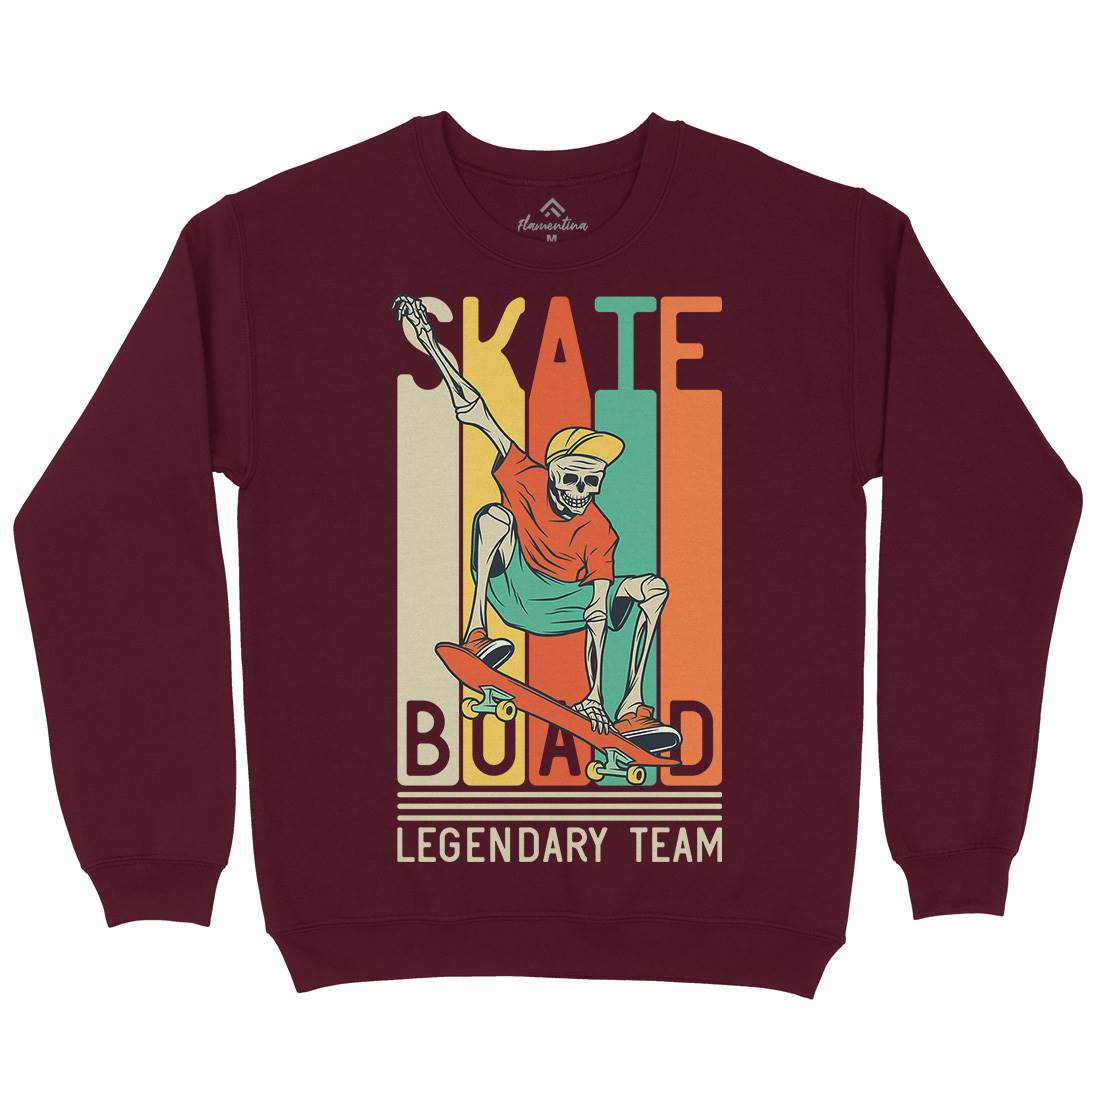 Legendary Team Mens Crew Neck Sweatshirt Skate D952